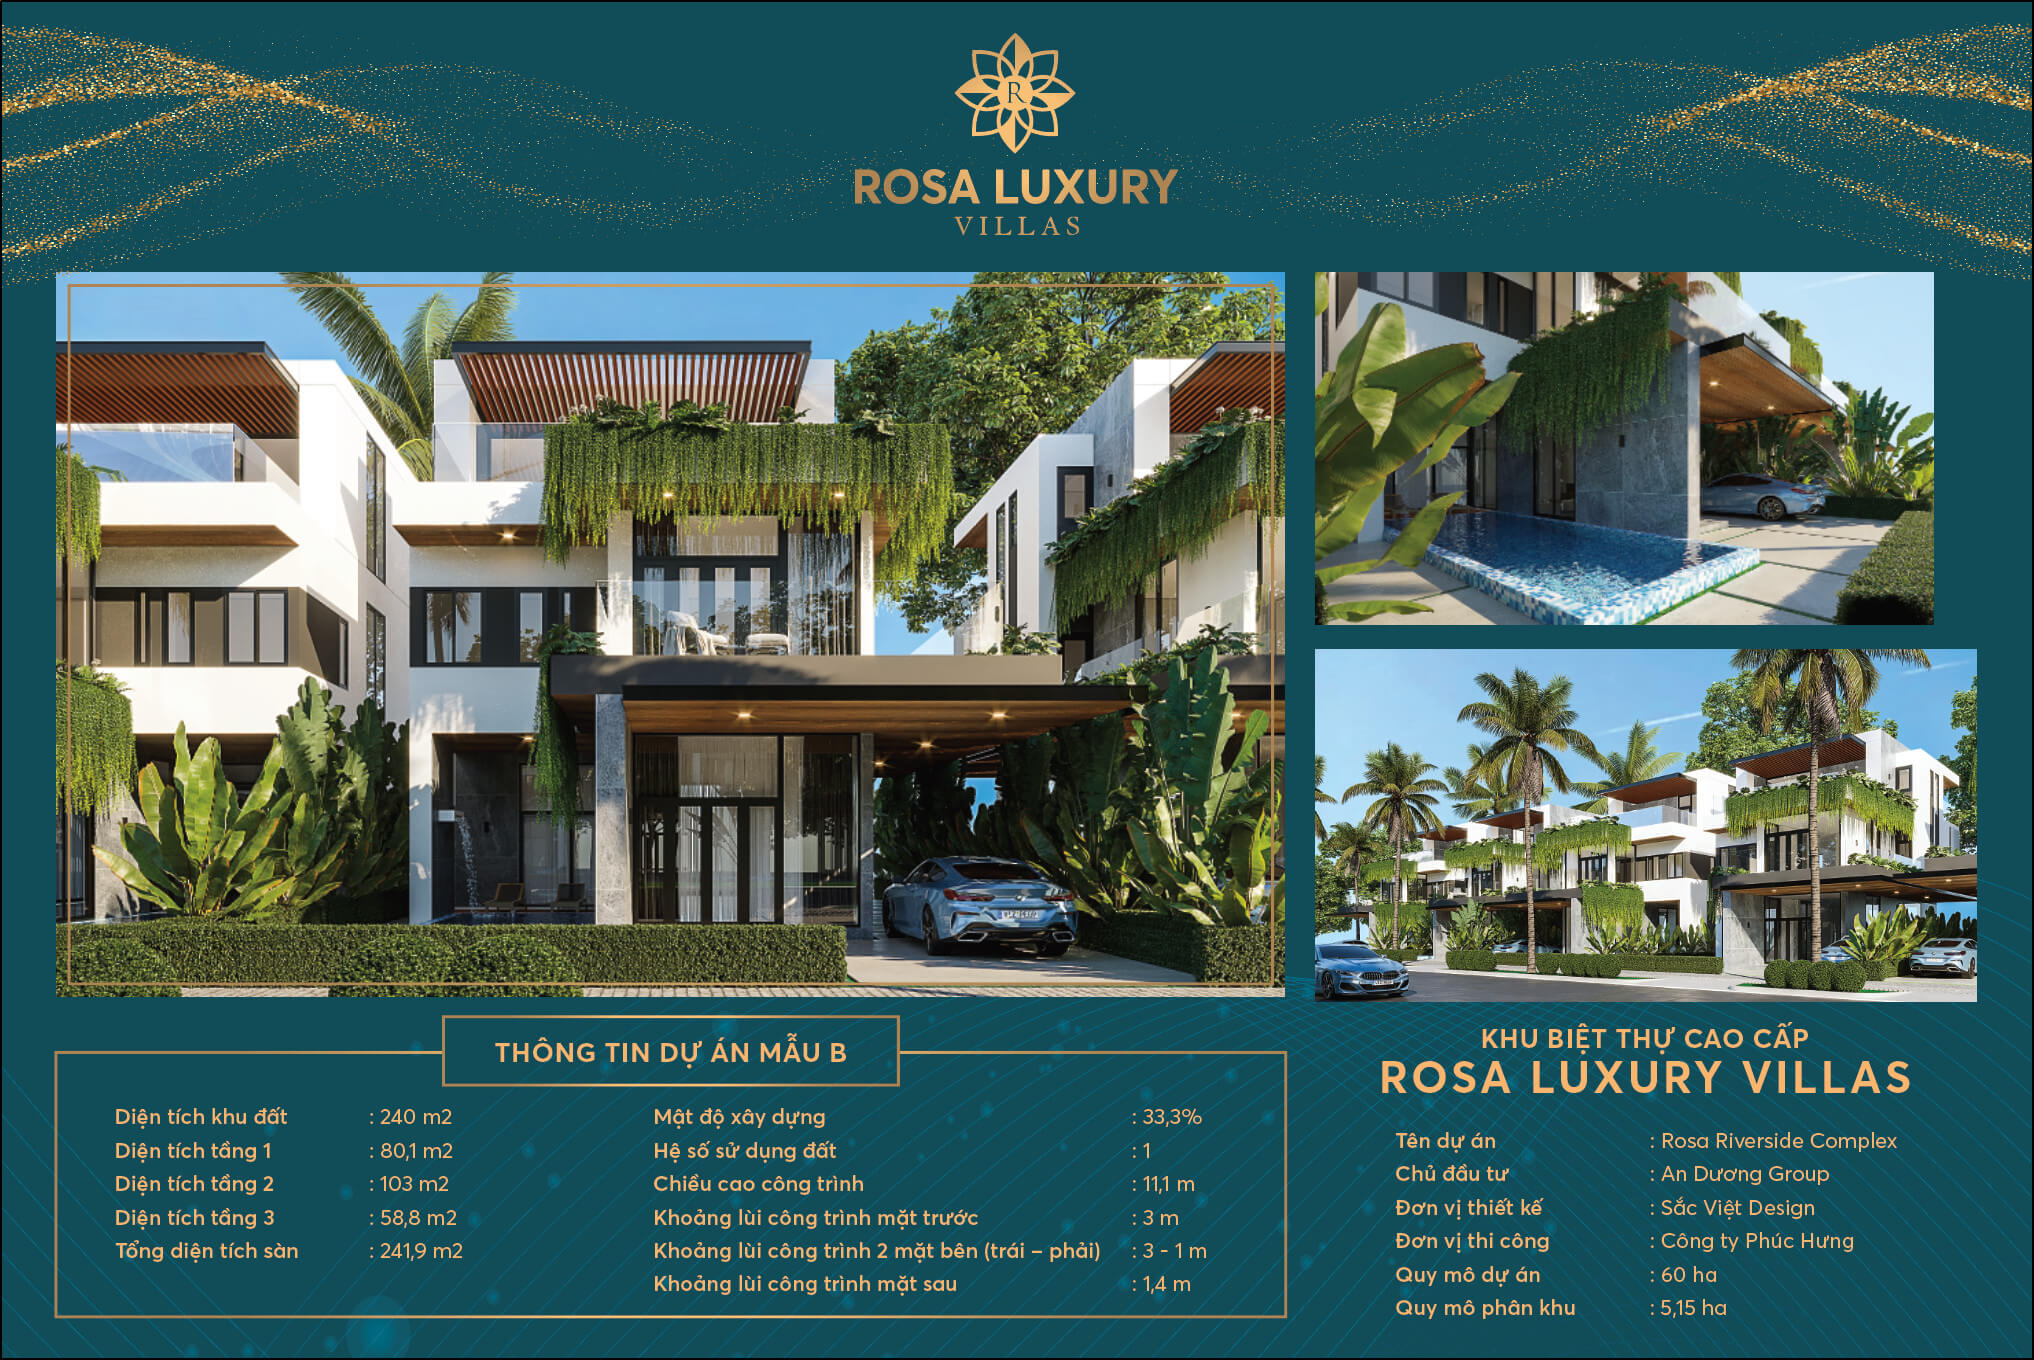 thiết kế biệt thự rosa luxury villas quảng nam mẫu b